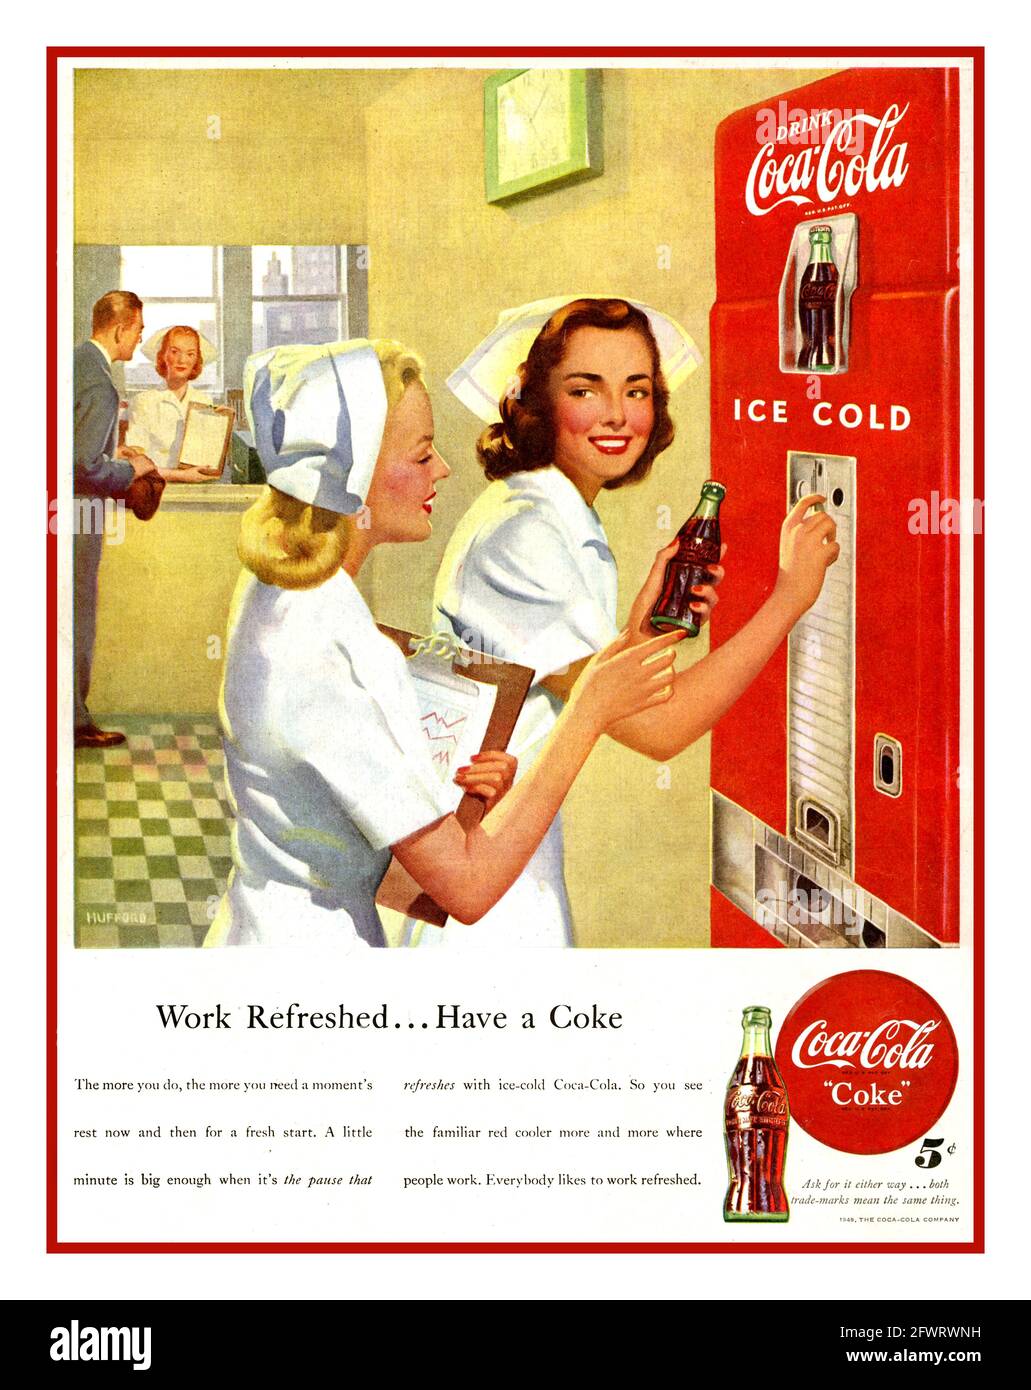 Coca Cola Vintage 1940s Nurses Coca Cola Press Poster Advertising Campaign Coca Cola Nurse 1948. Advertisement 'work refreshed have a coke' priced at 5 cents USA Stock Photo